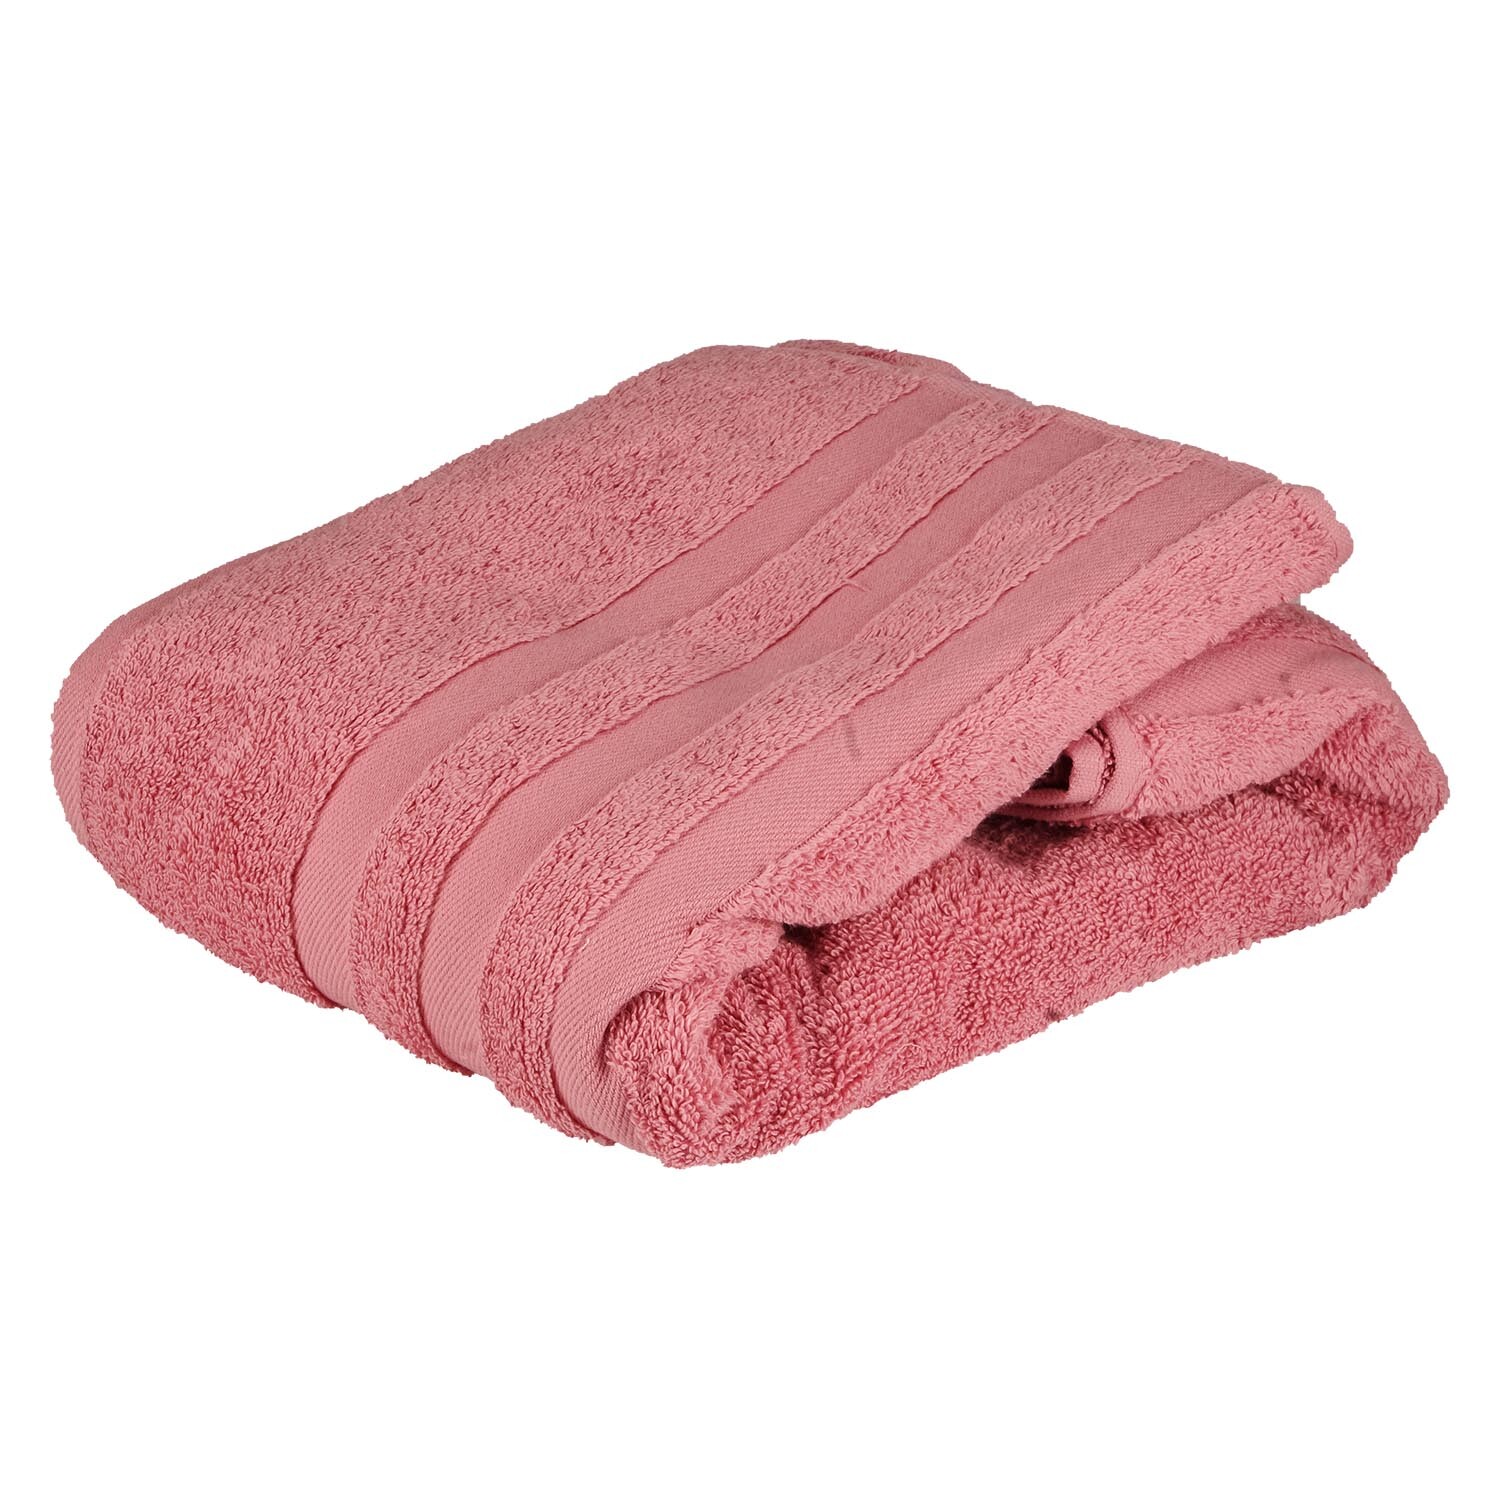 Turkish Cotton Rosa Terry Dobby Bath Towel Image